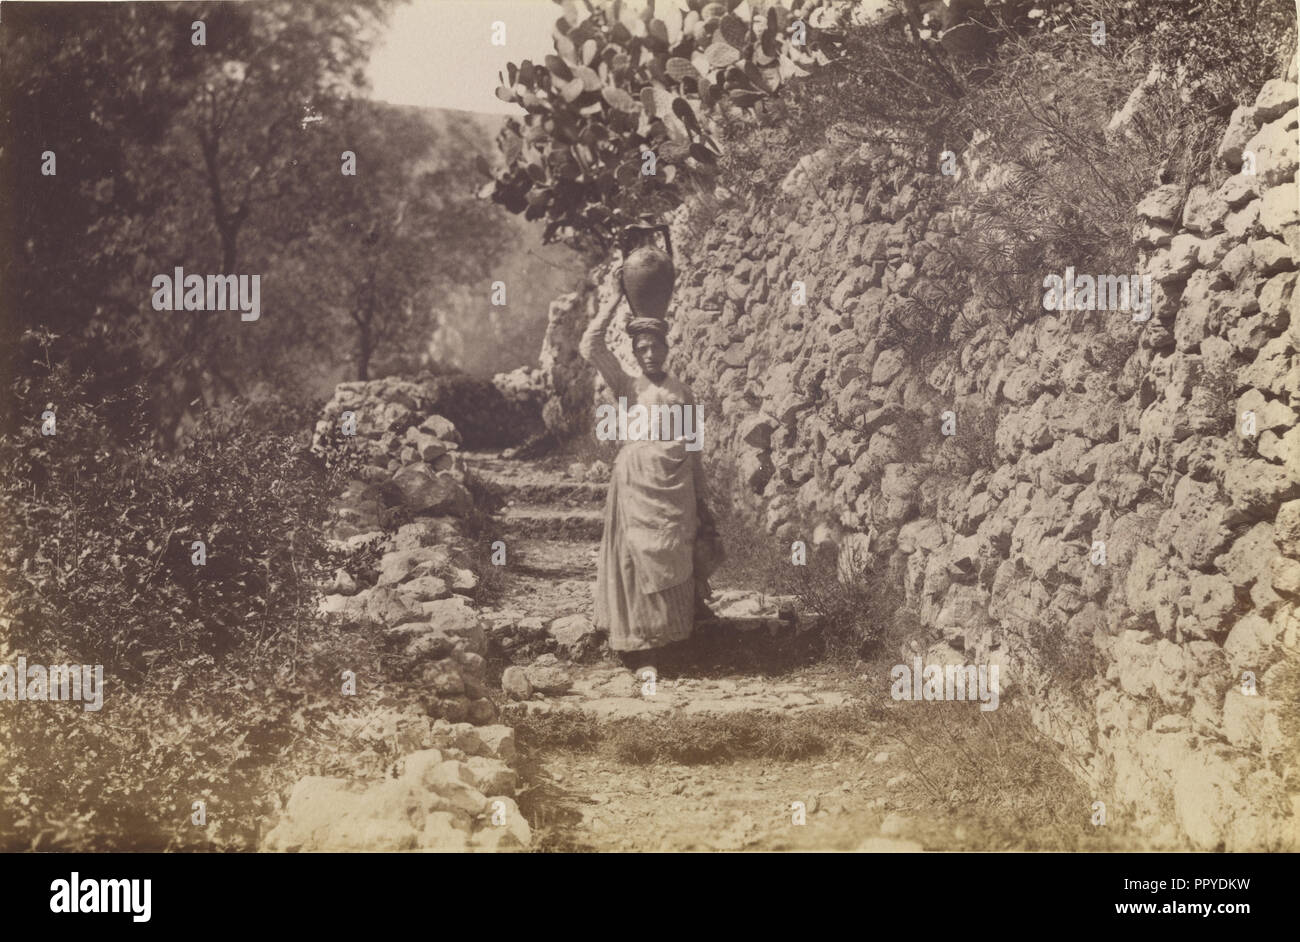 Capri woman carrying jug; James Anderson, British, 1813 - 1877, about 1845 - 1877; Albumen silver print Stock Photo